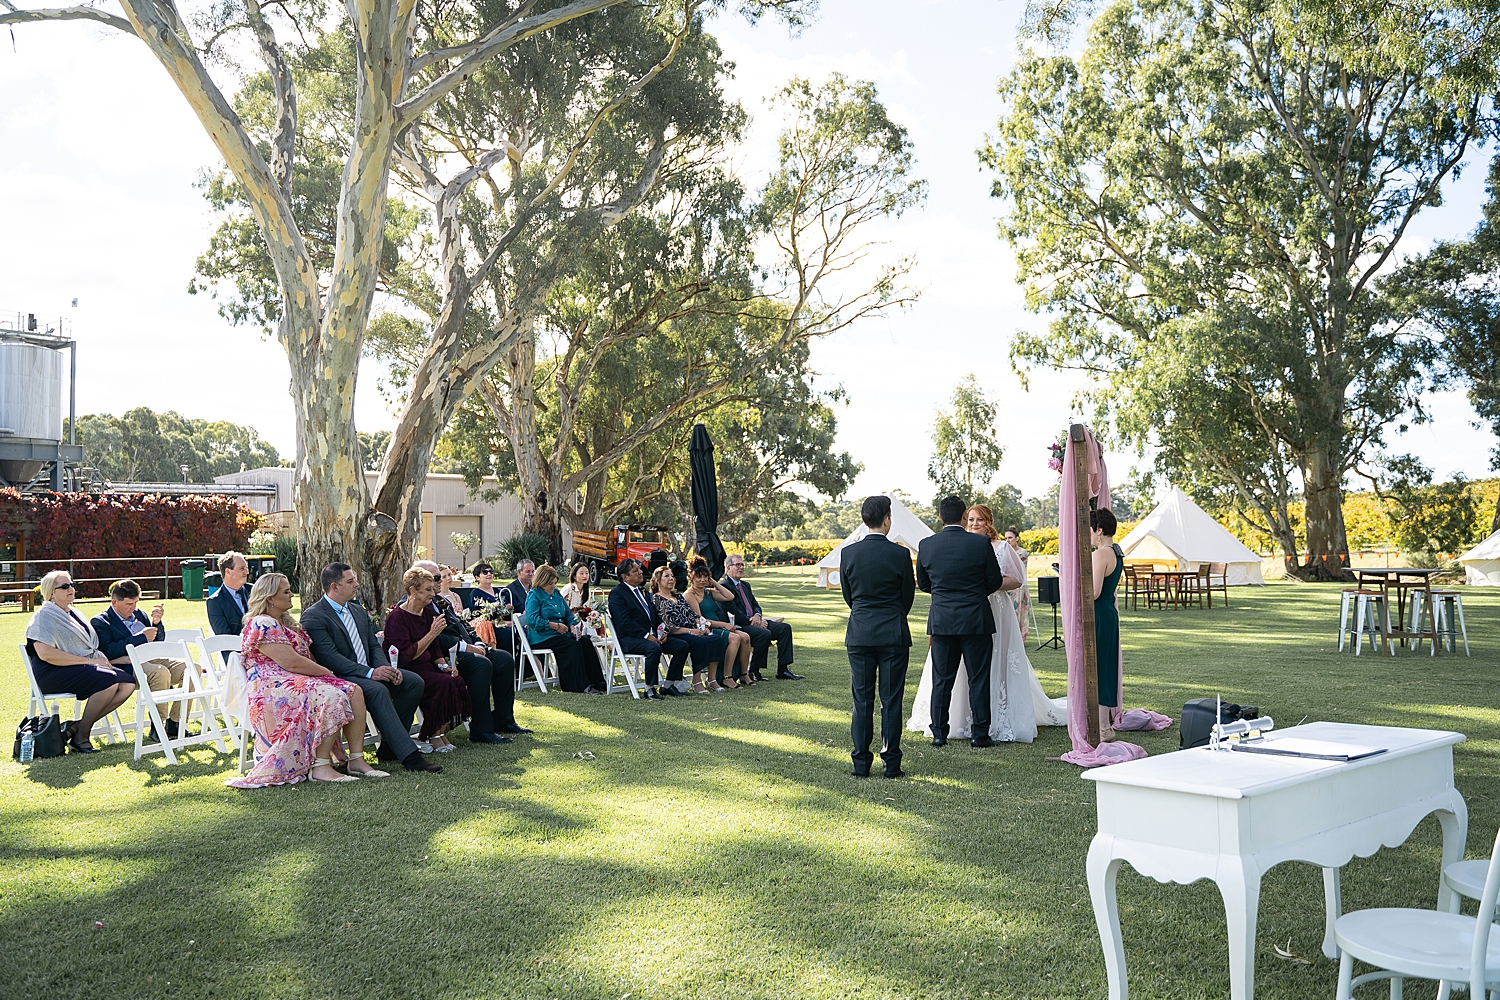 Barossa Valley wedding Ceremony, St Hallet Wines garden ceremony setup